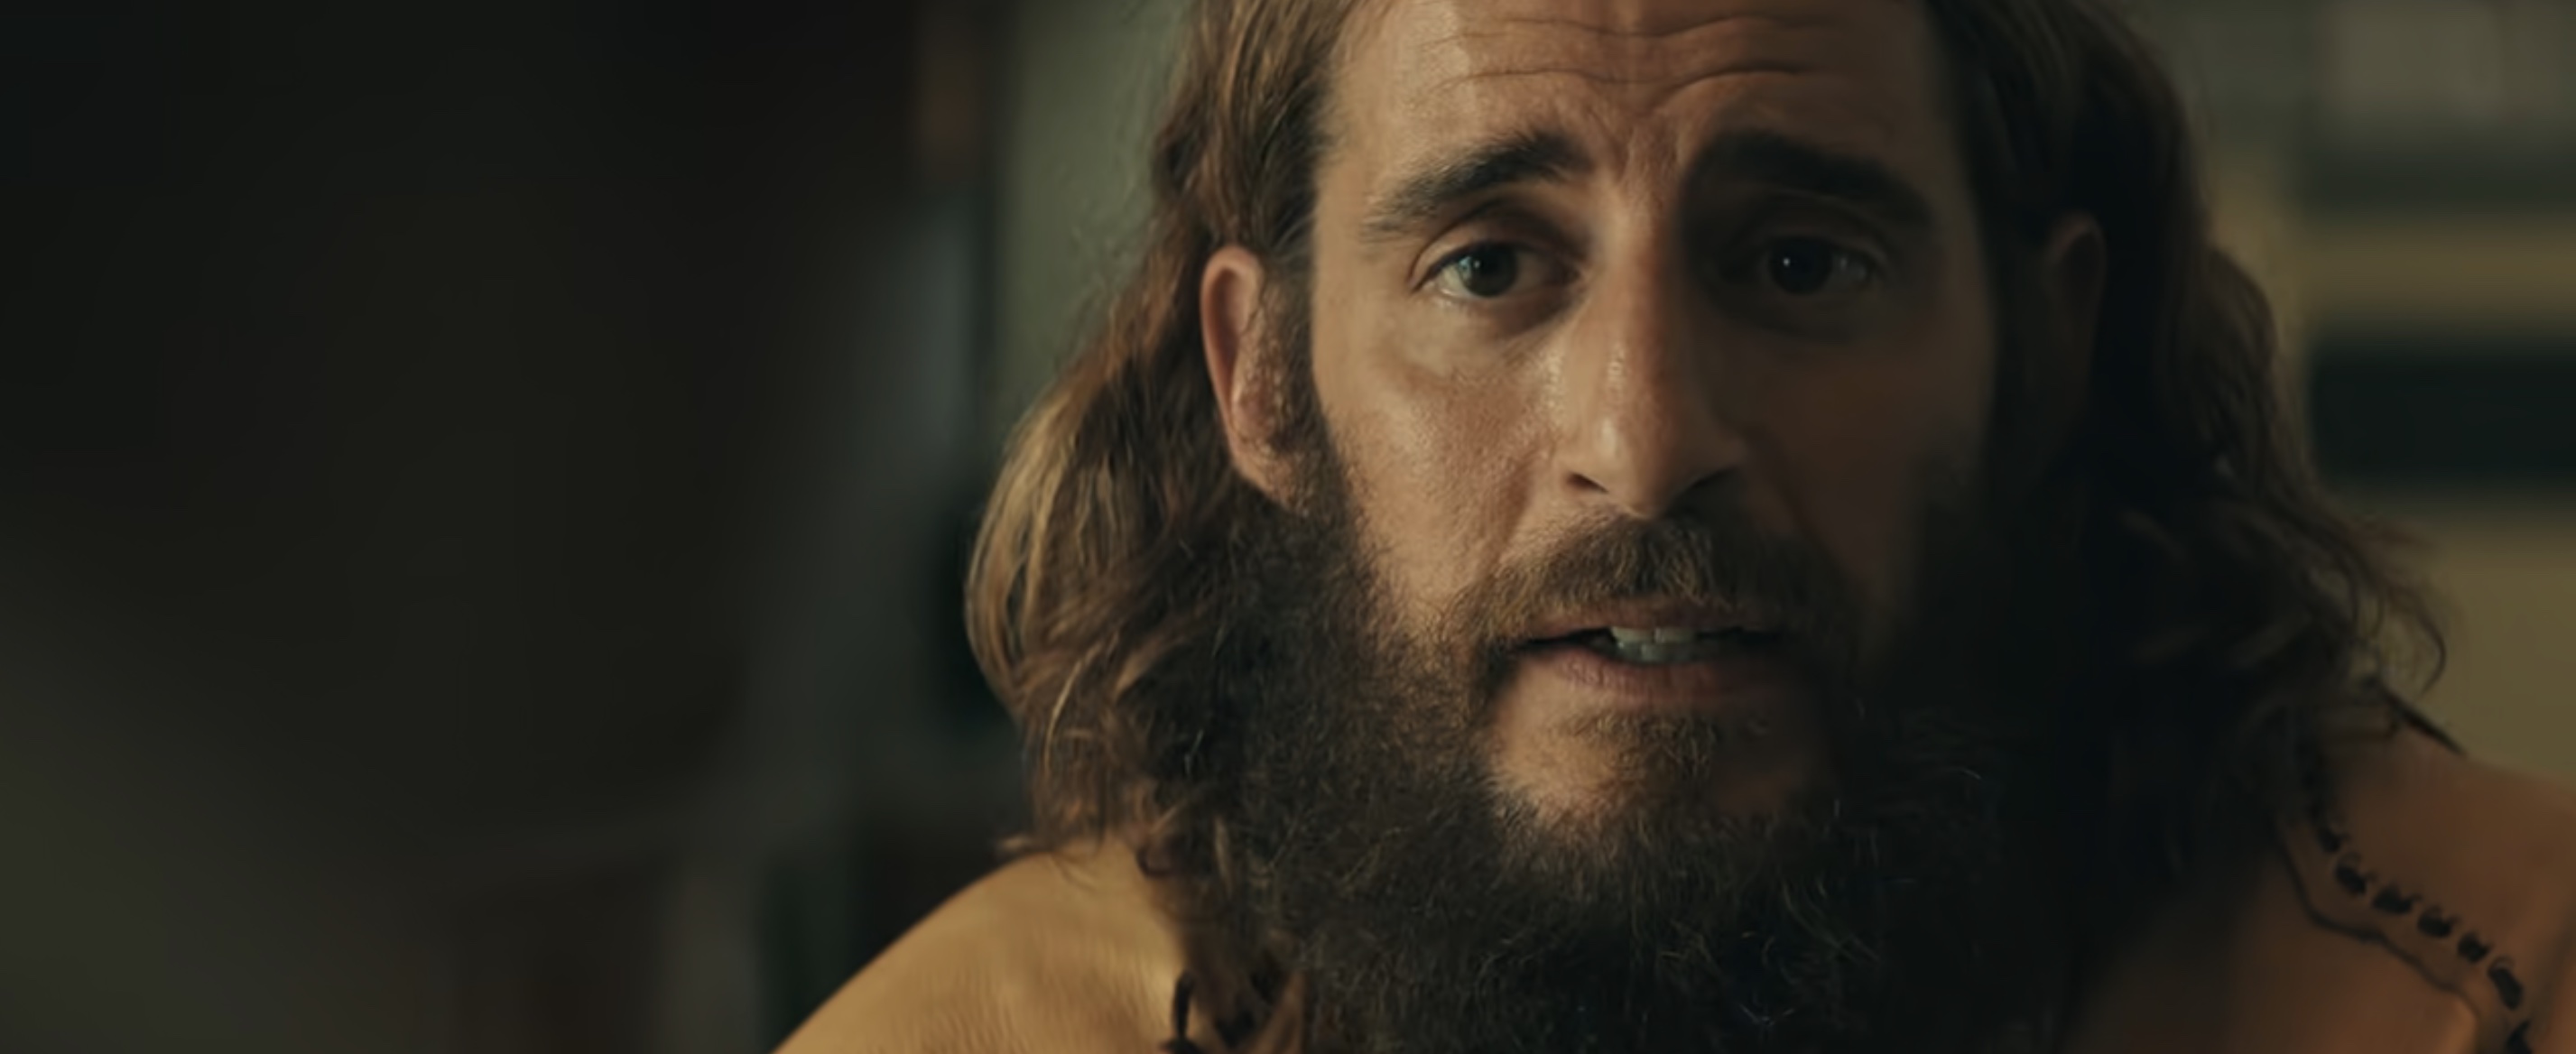 Jesus Revolution Cast on Netflix - Jonathan Roumie as Lonnie Frisbee